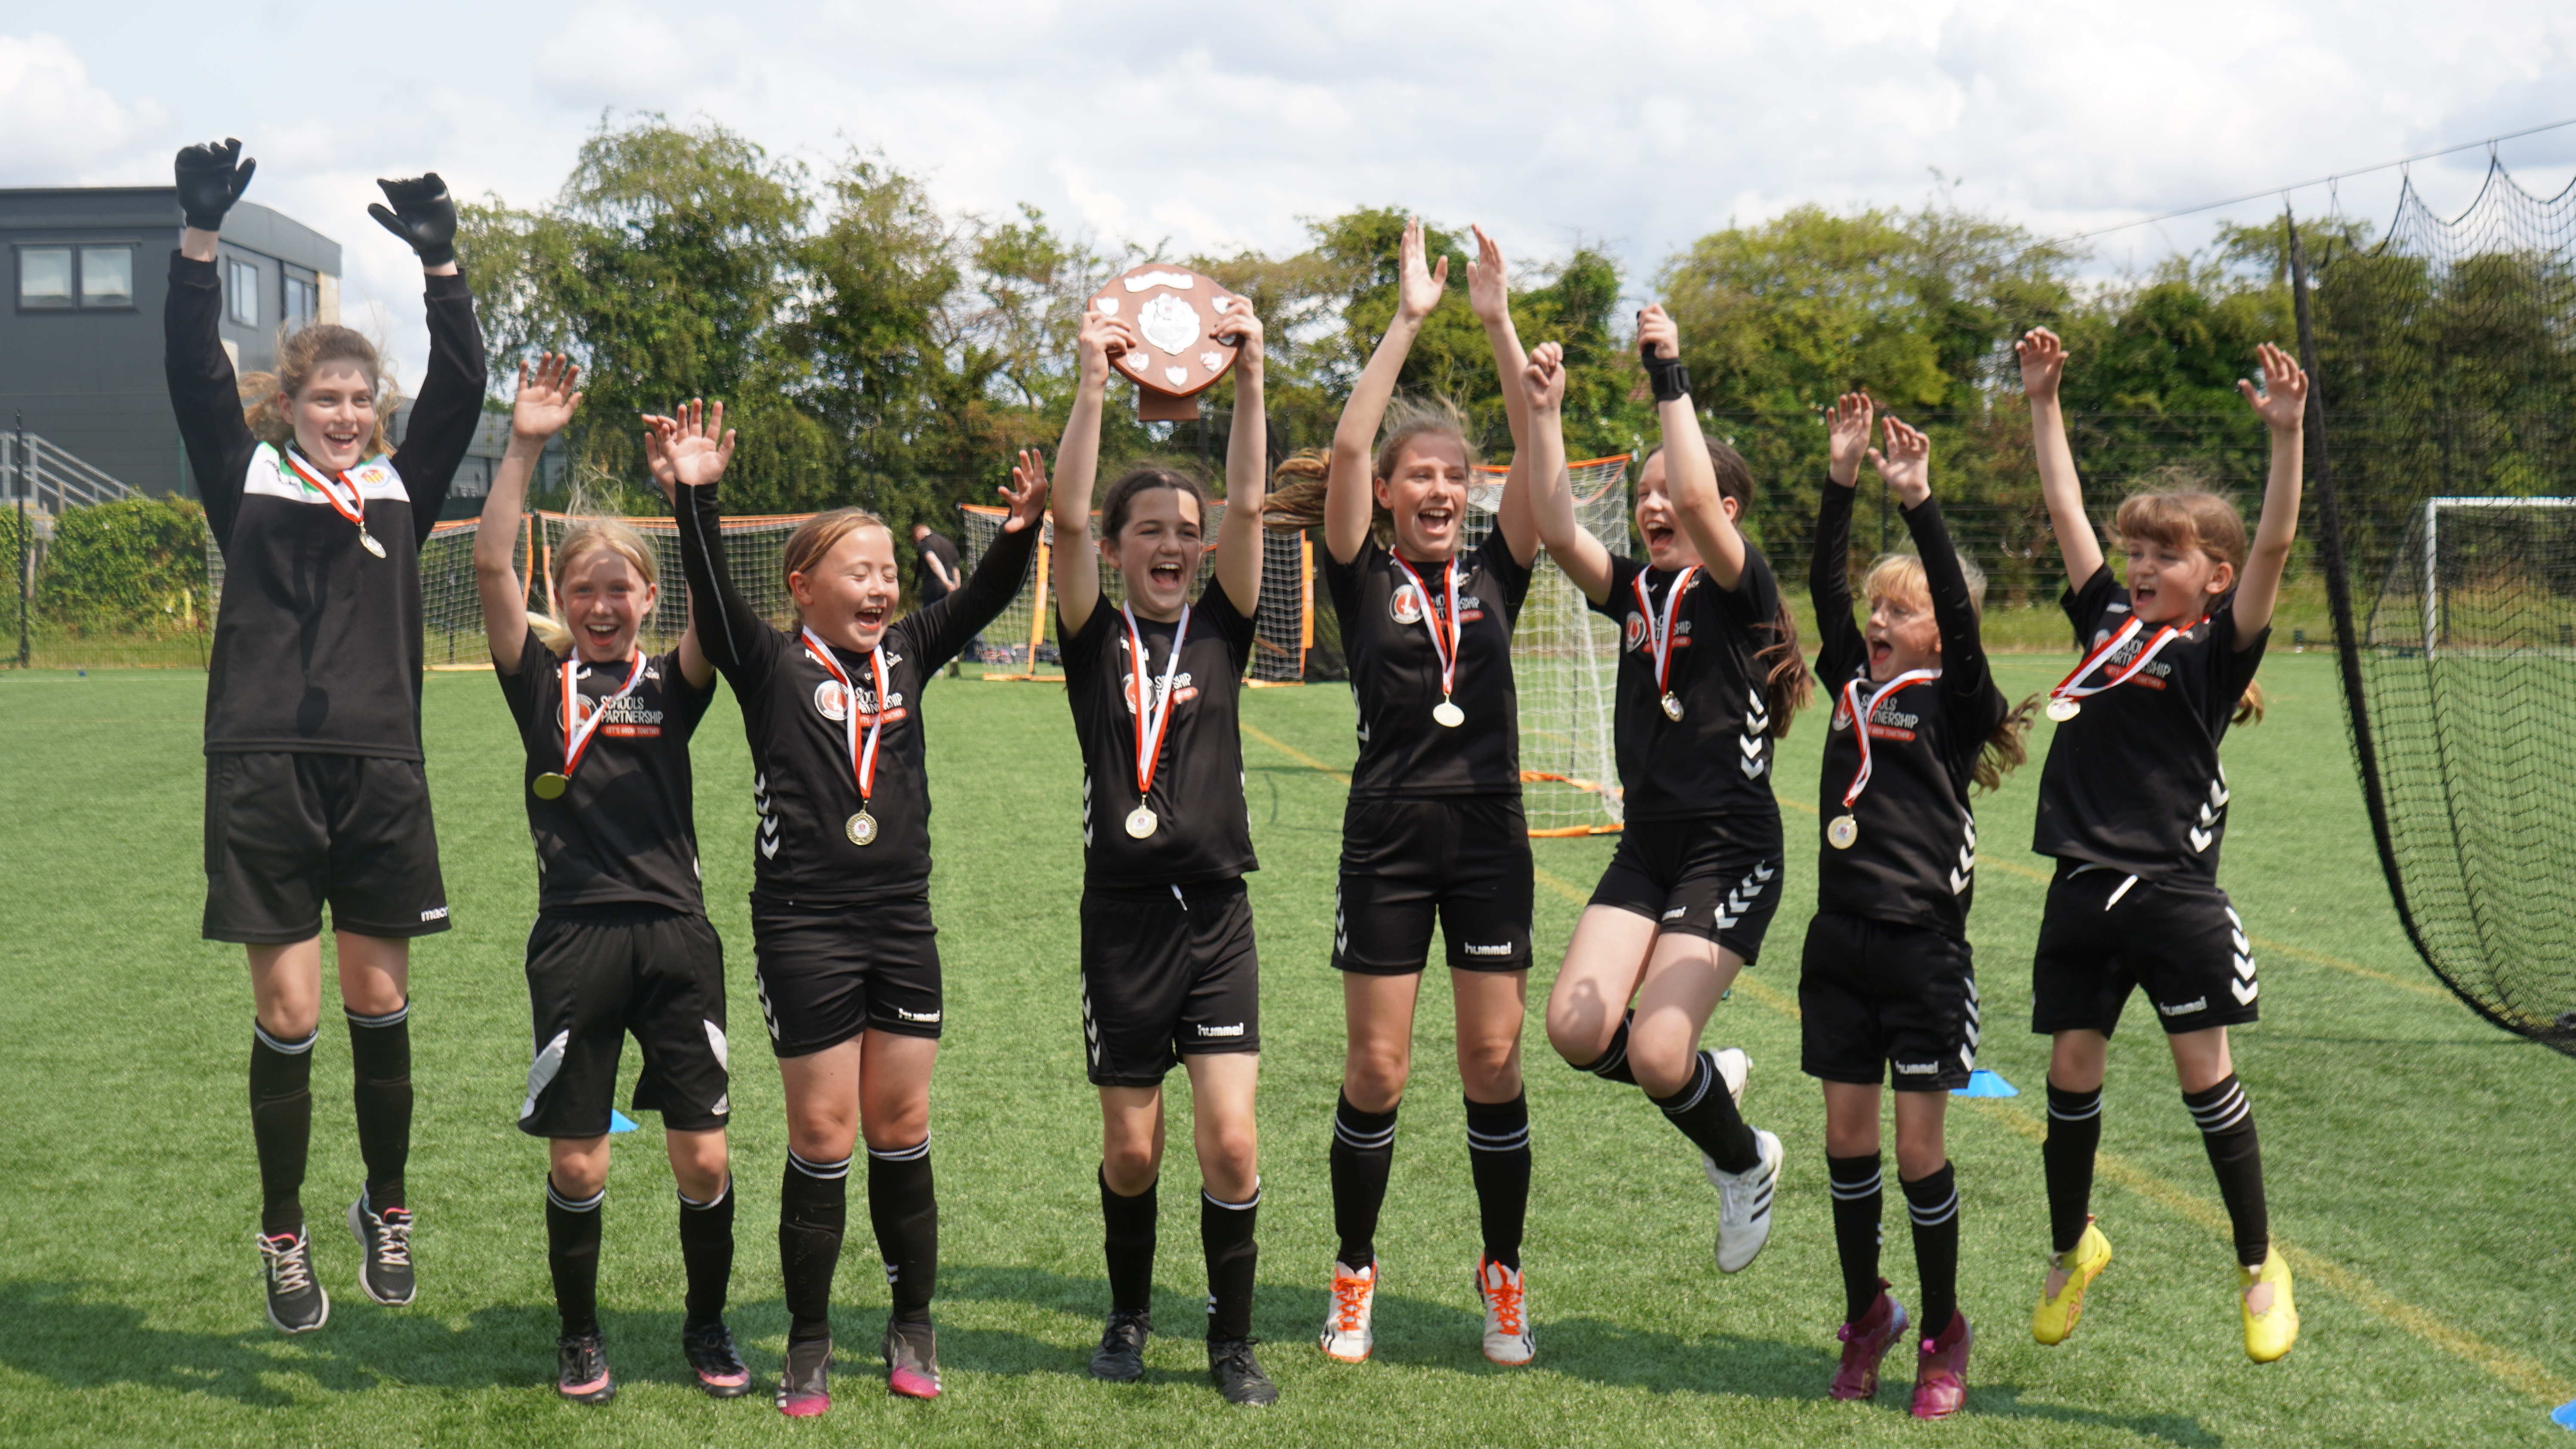 Girls celebrating winning a tournament